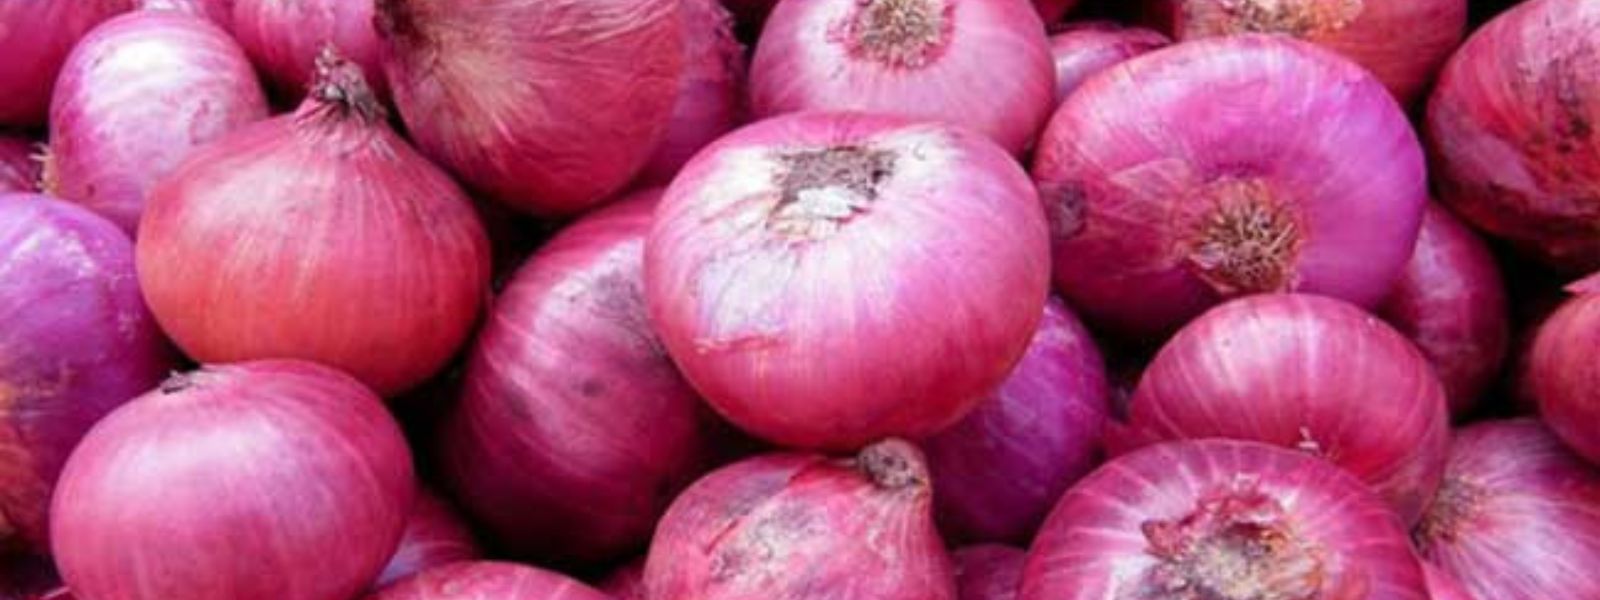 Sri Lanka to receive big onions from China